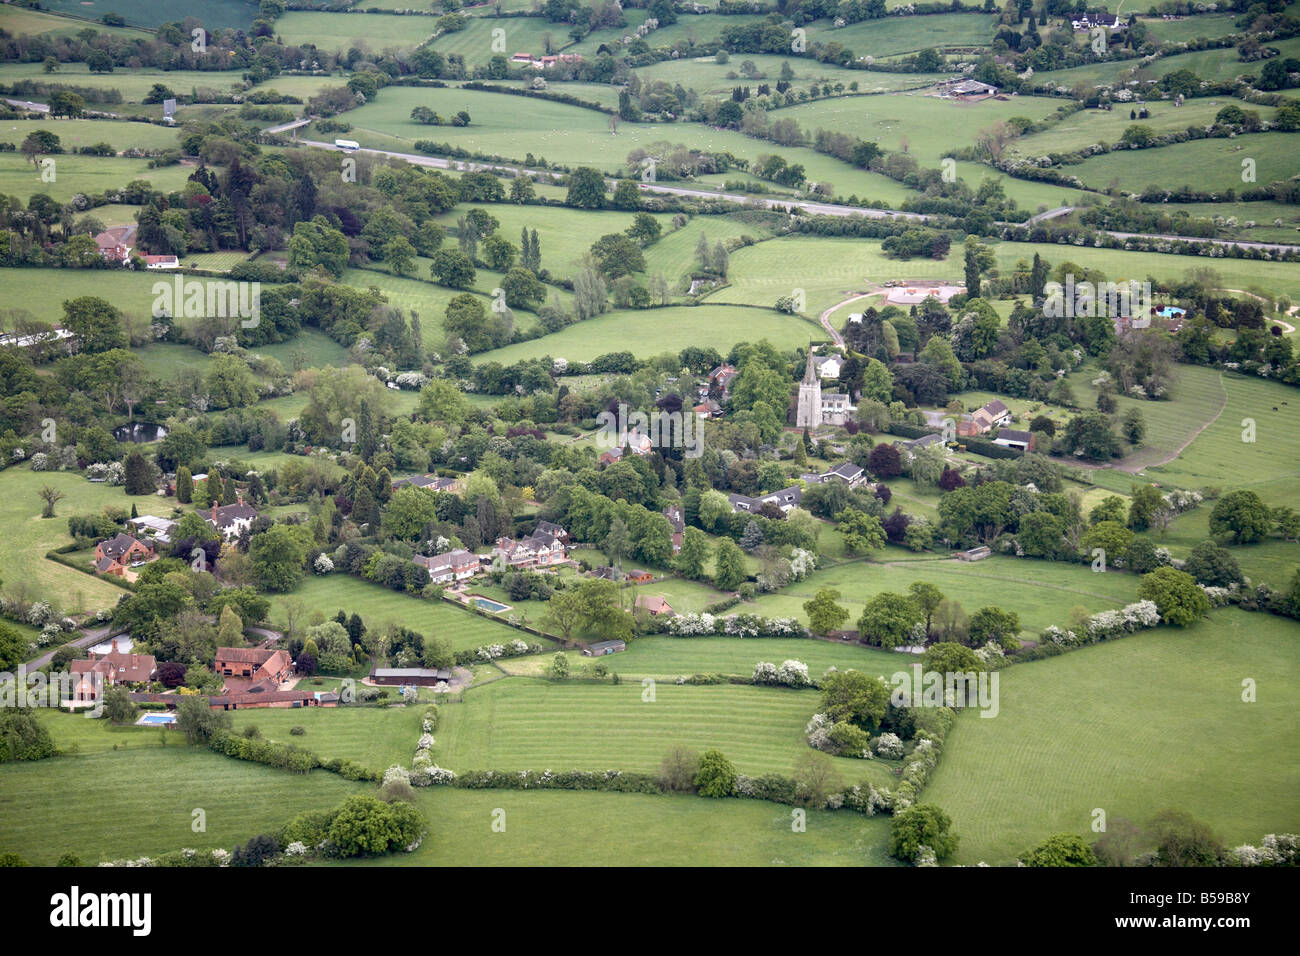 Vista aérea del sur de Lapworth Village país alberga jardines árboles campos iglesia Church Lane autopista M40 Warwickshire B94 Engla Foto de stock